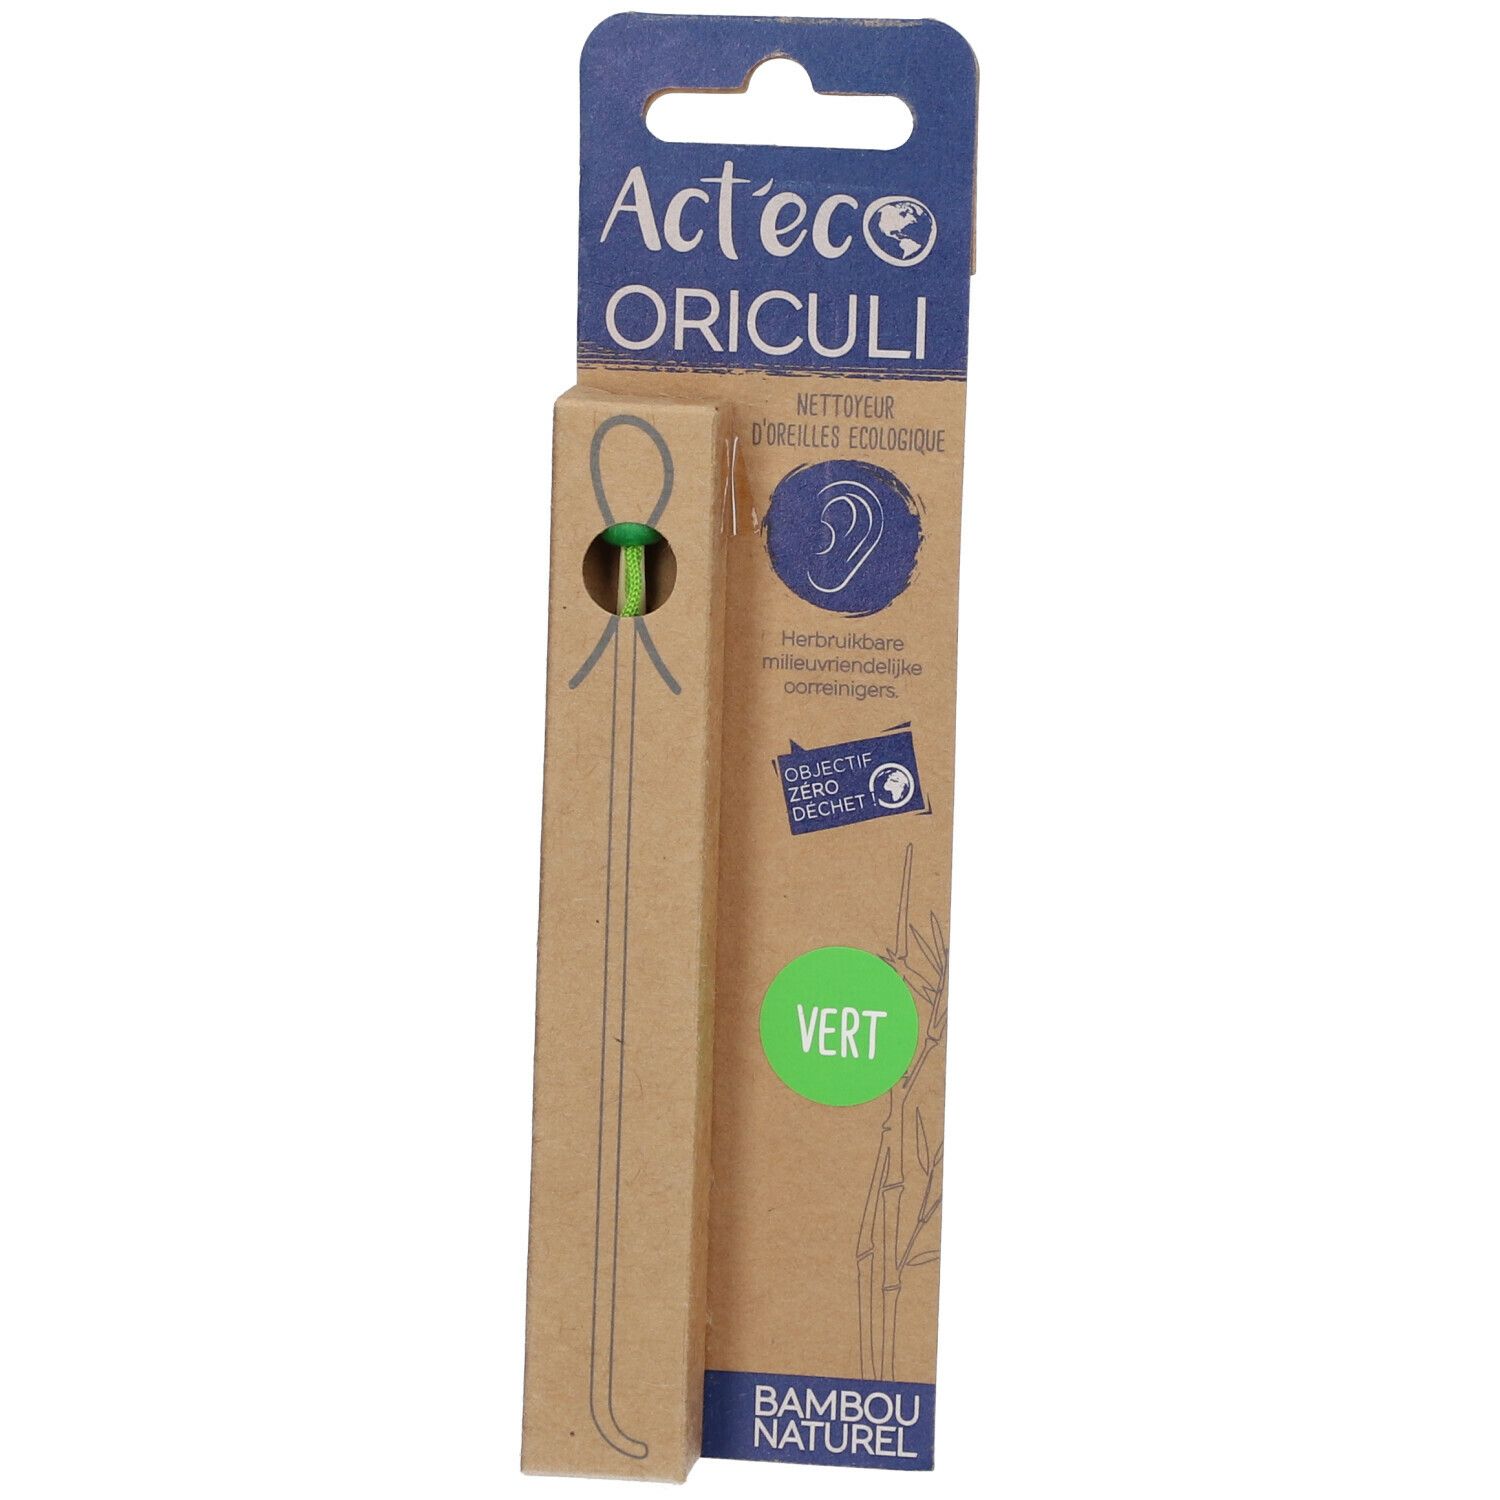 Image of Act'eco Oriculi Bambou Vert